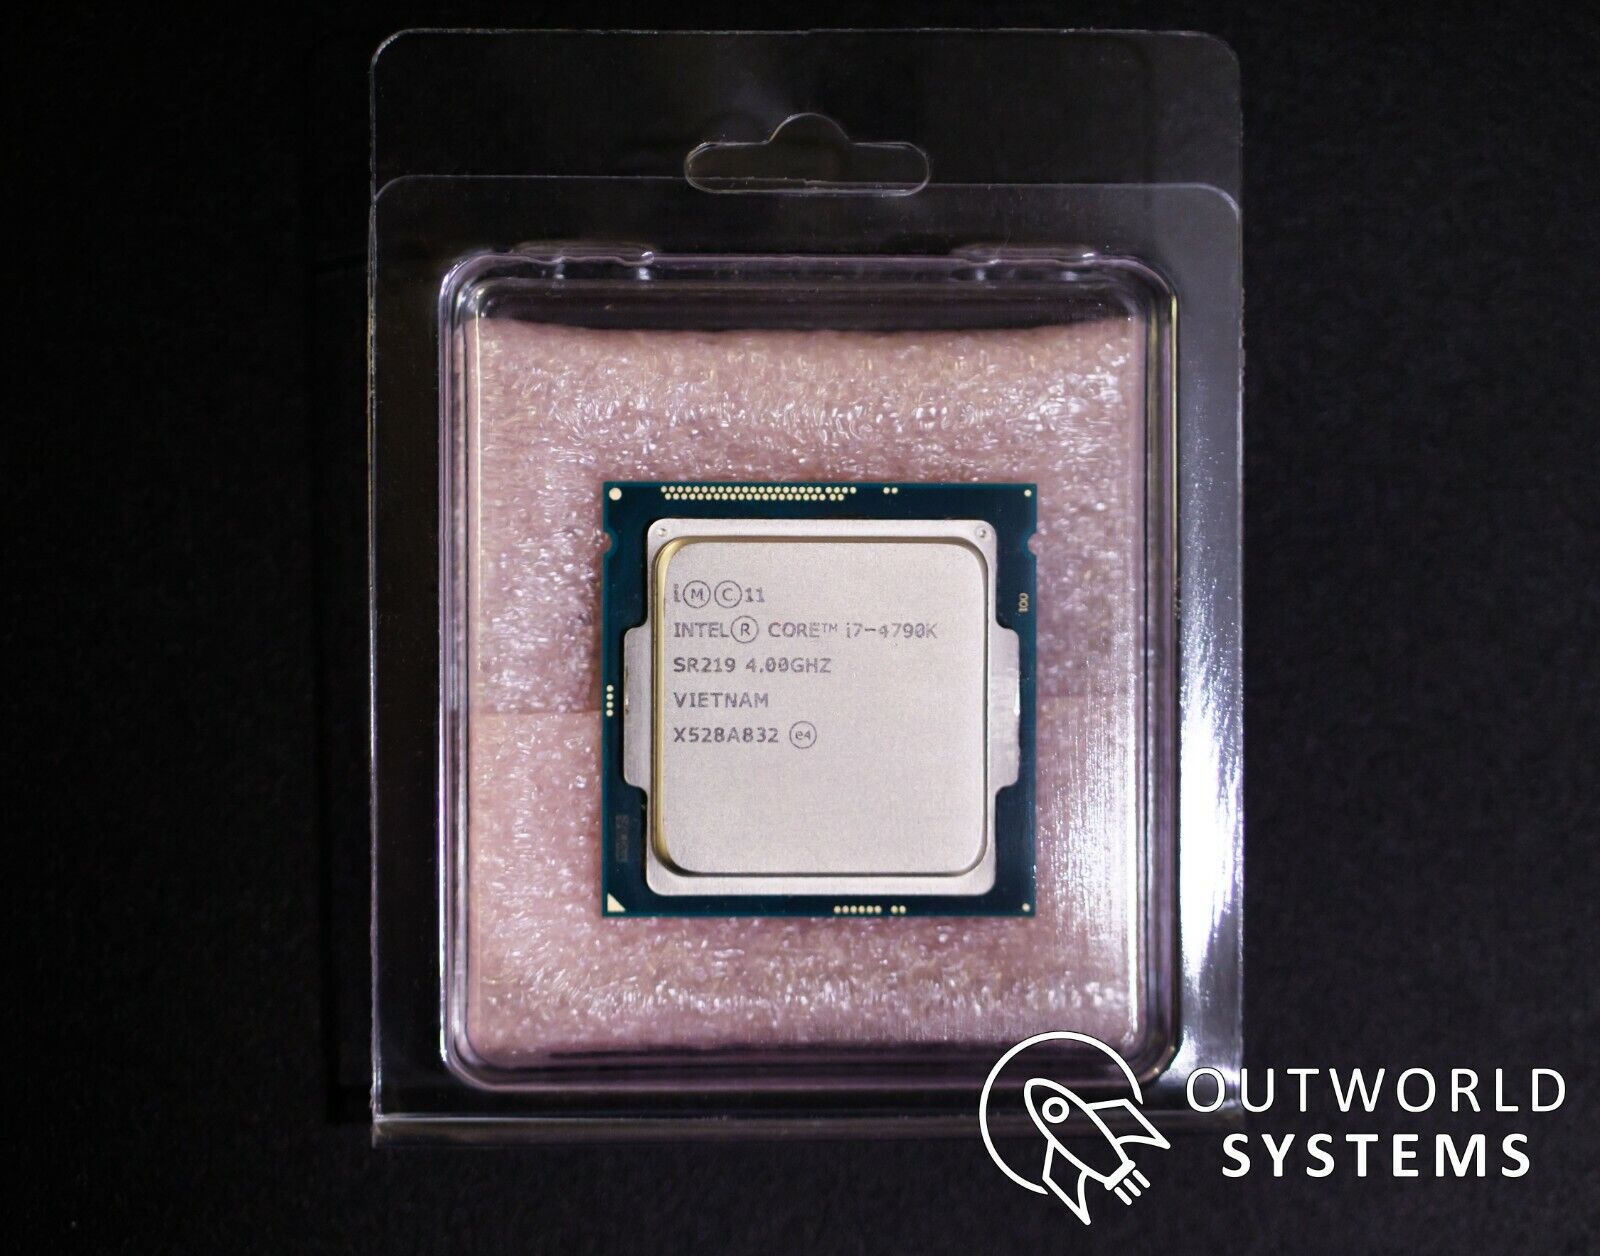 Intel Core i7-4790K - 4.00 GHz Quad Core - SR219 LGA1150 - Warranty